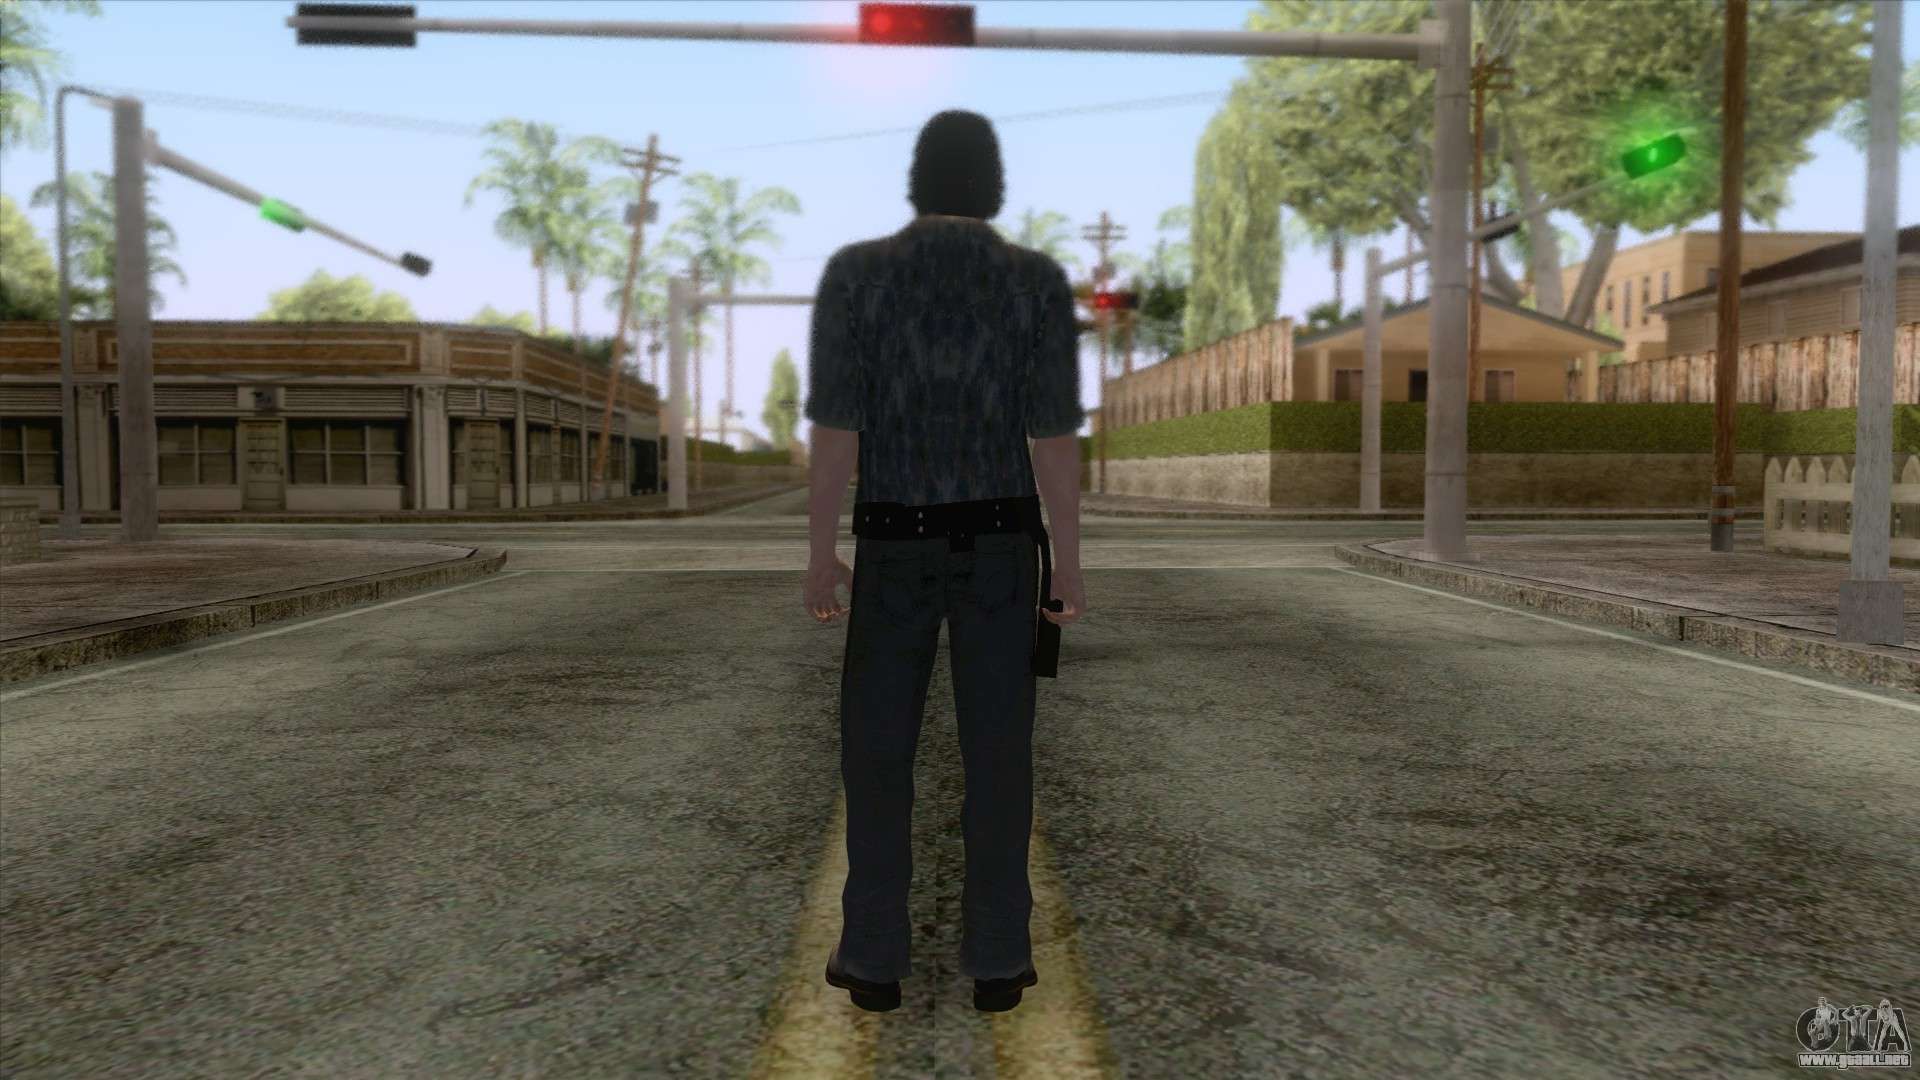 The Walking Dead - Rick Grimes for GTA San Andreas